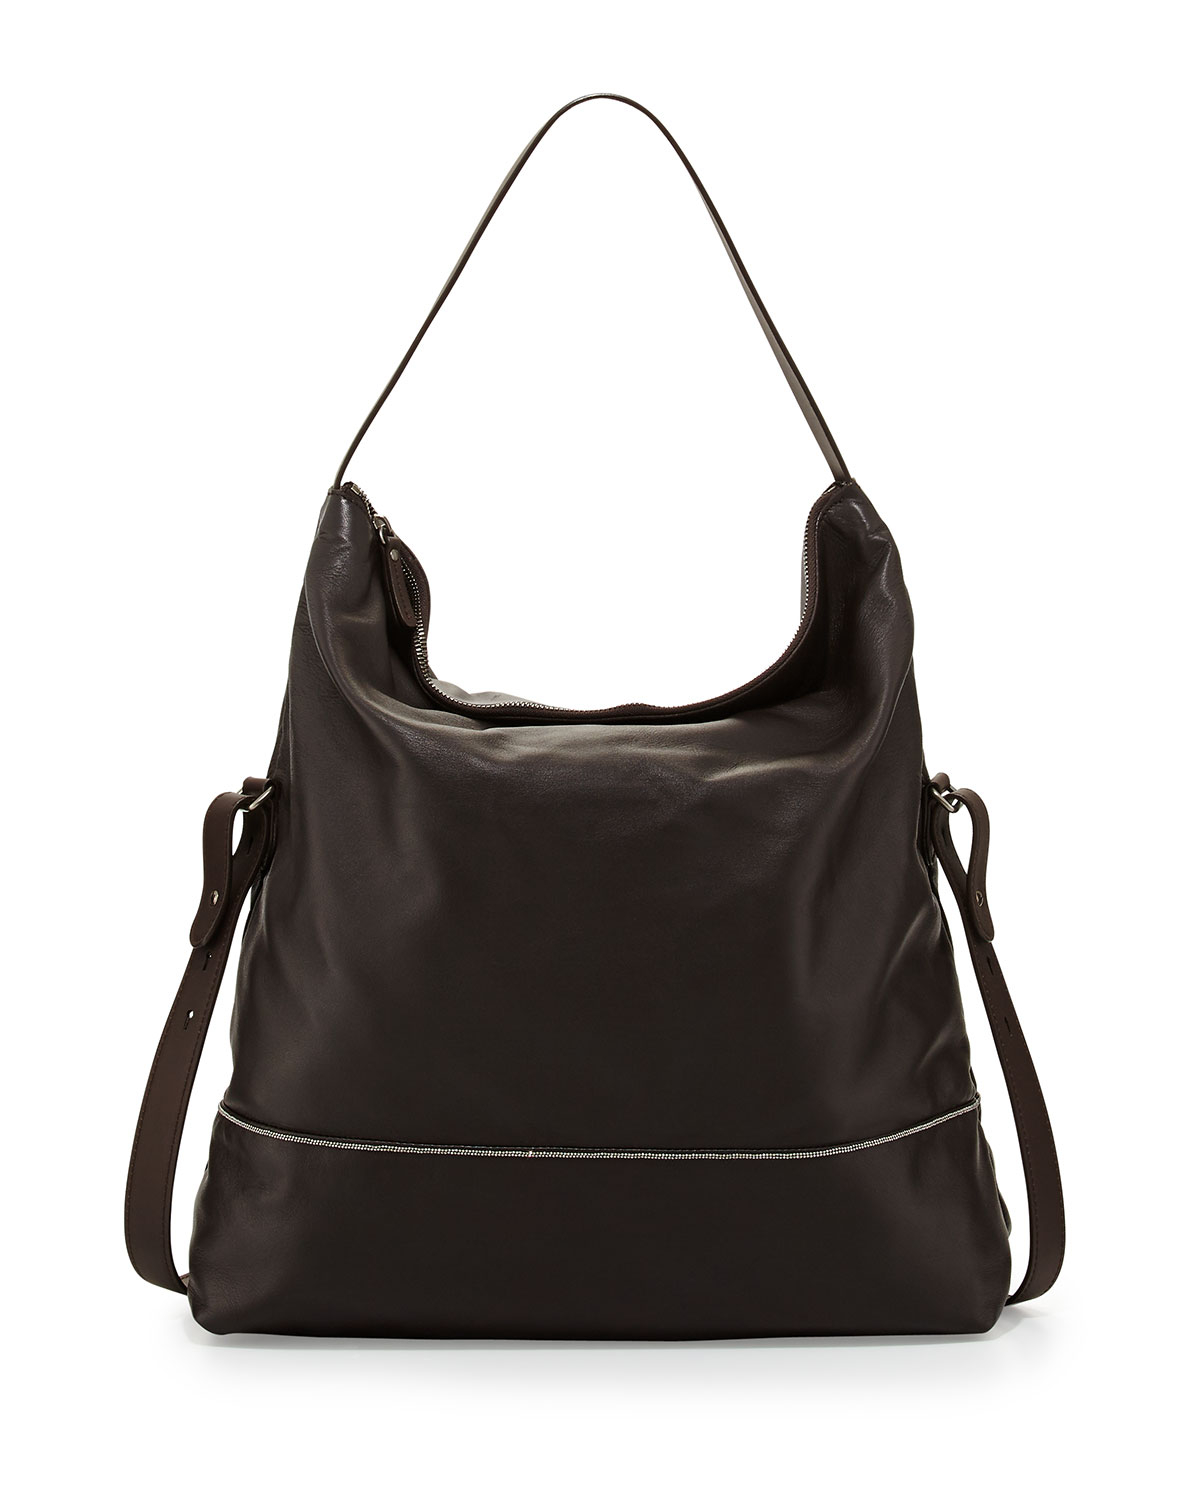 Brunello Cucinelli Leather Hobo Crossbody Bag in Brown (DARK BROWN) | Lyst